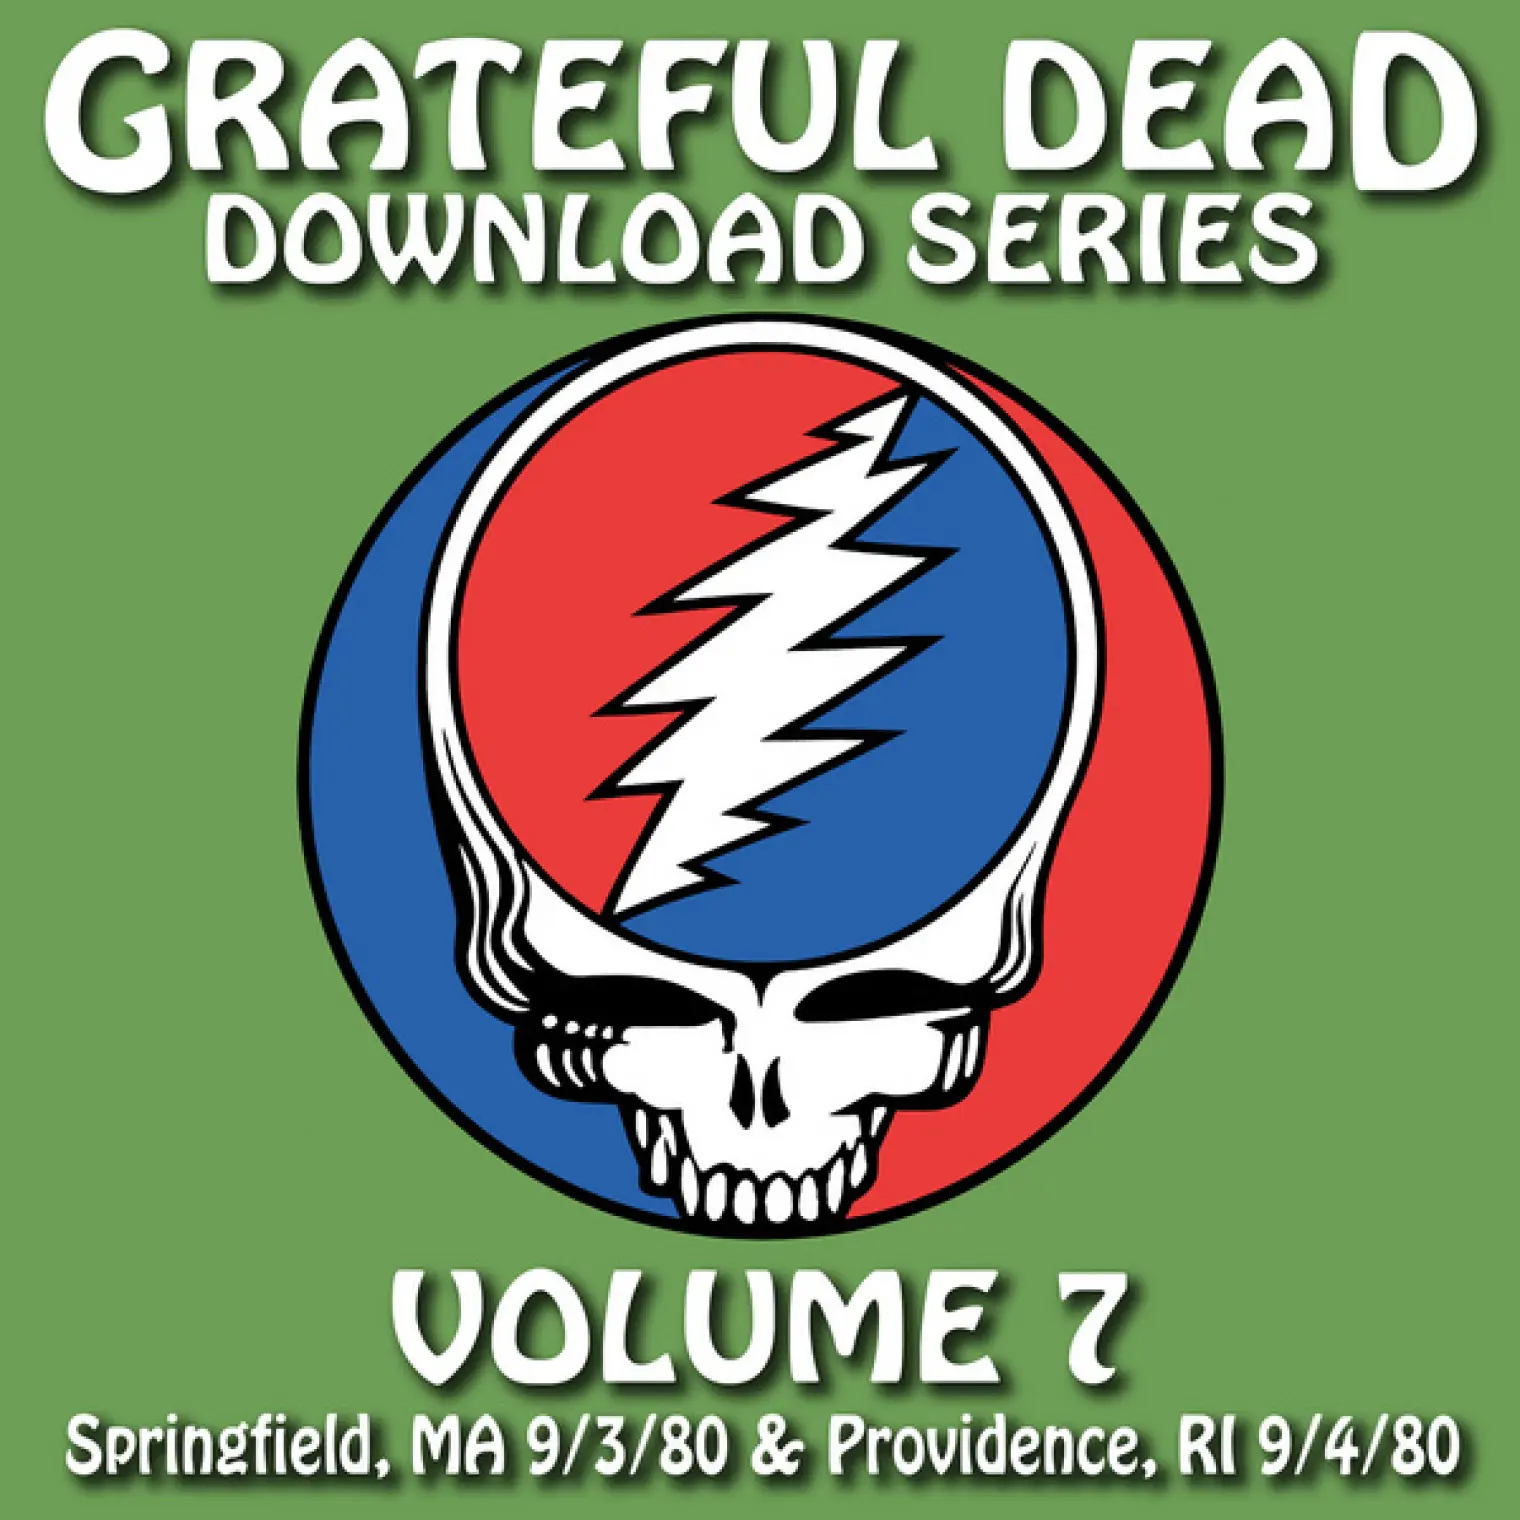 Download Series Vol. 7: Springfield Civic Center, Springfield, MA 9/30/80 / Providence Civic Center, Providence, RI 9/4/80 (Live) -  Grateful Dead 